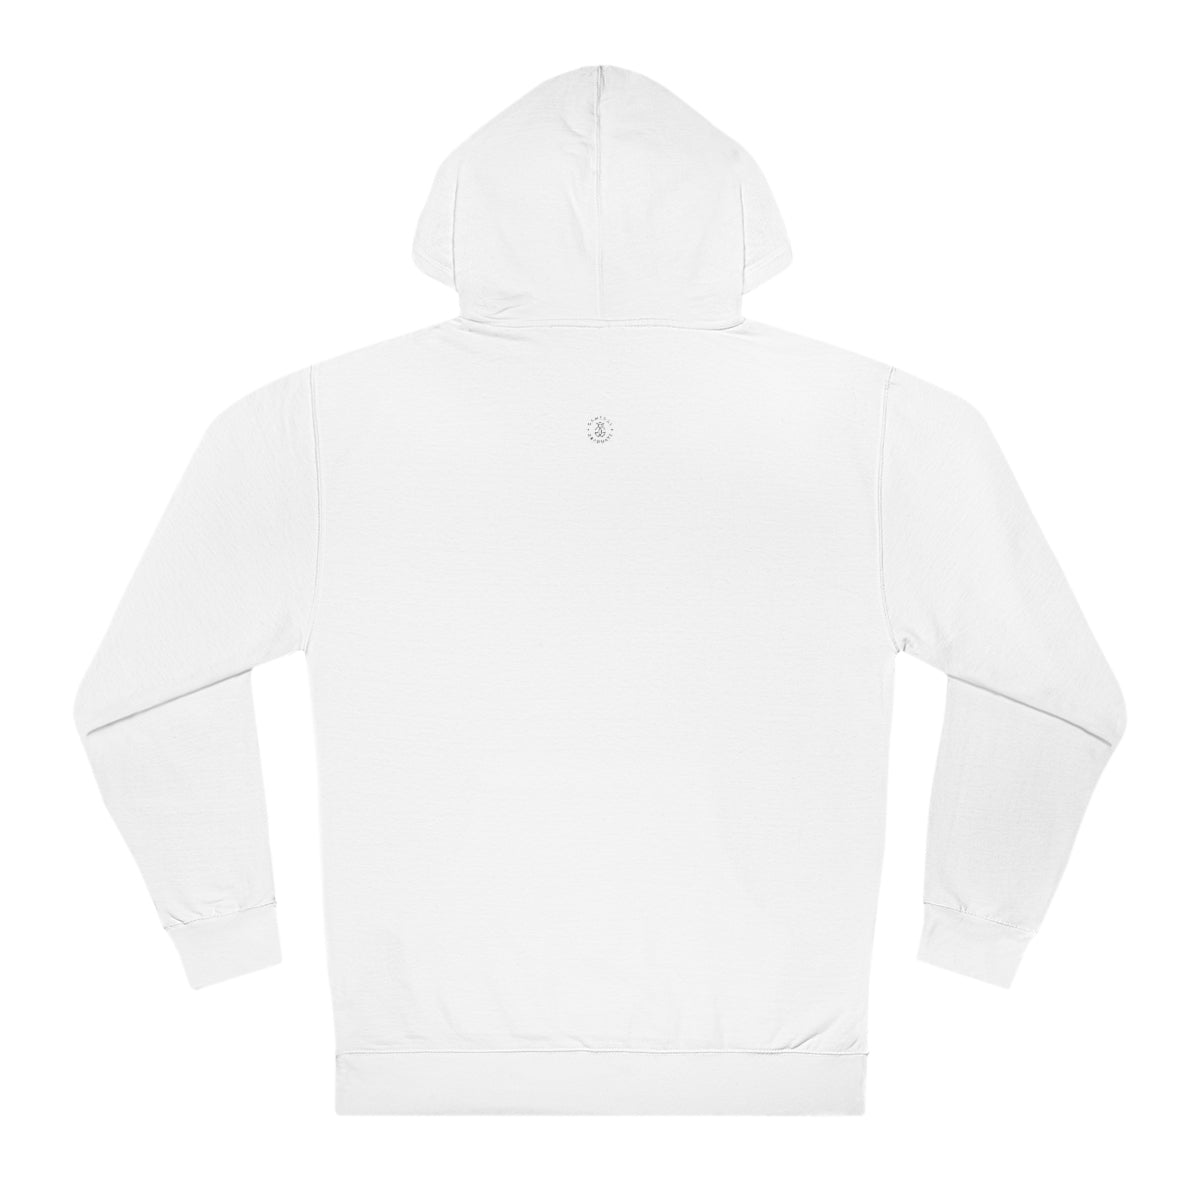 South Carolina Hooded Sweatshirt - GG - ITC